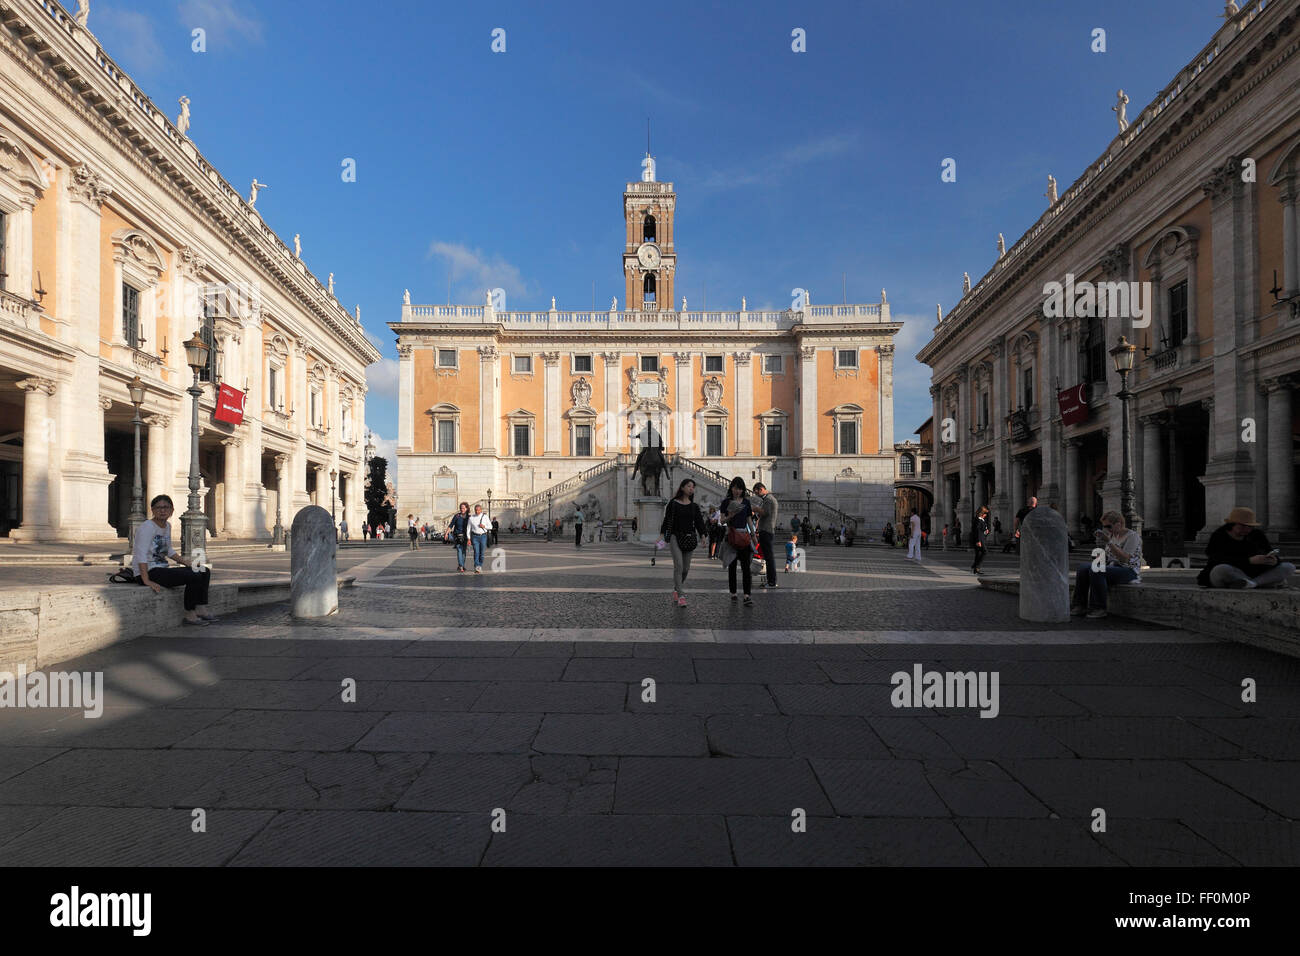 The Capitoline Museums (Musei Capitolini) in Piazza del Campidoglio, on the Capitoline Hill in Rome, Italy Stock Photo